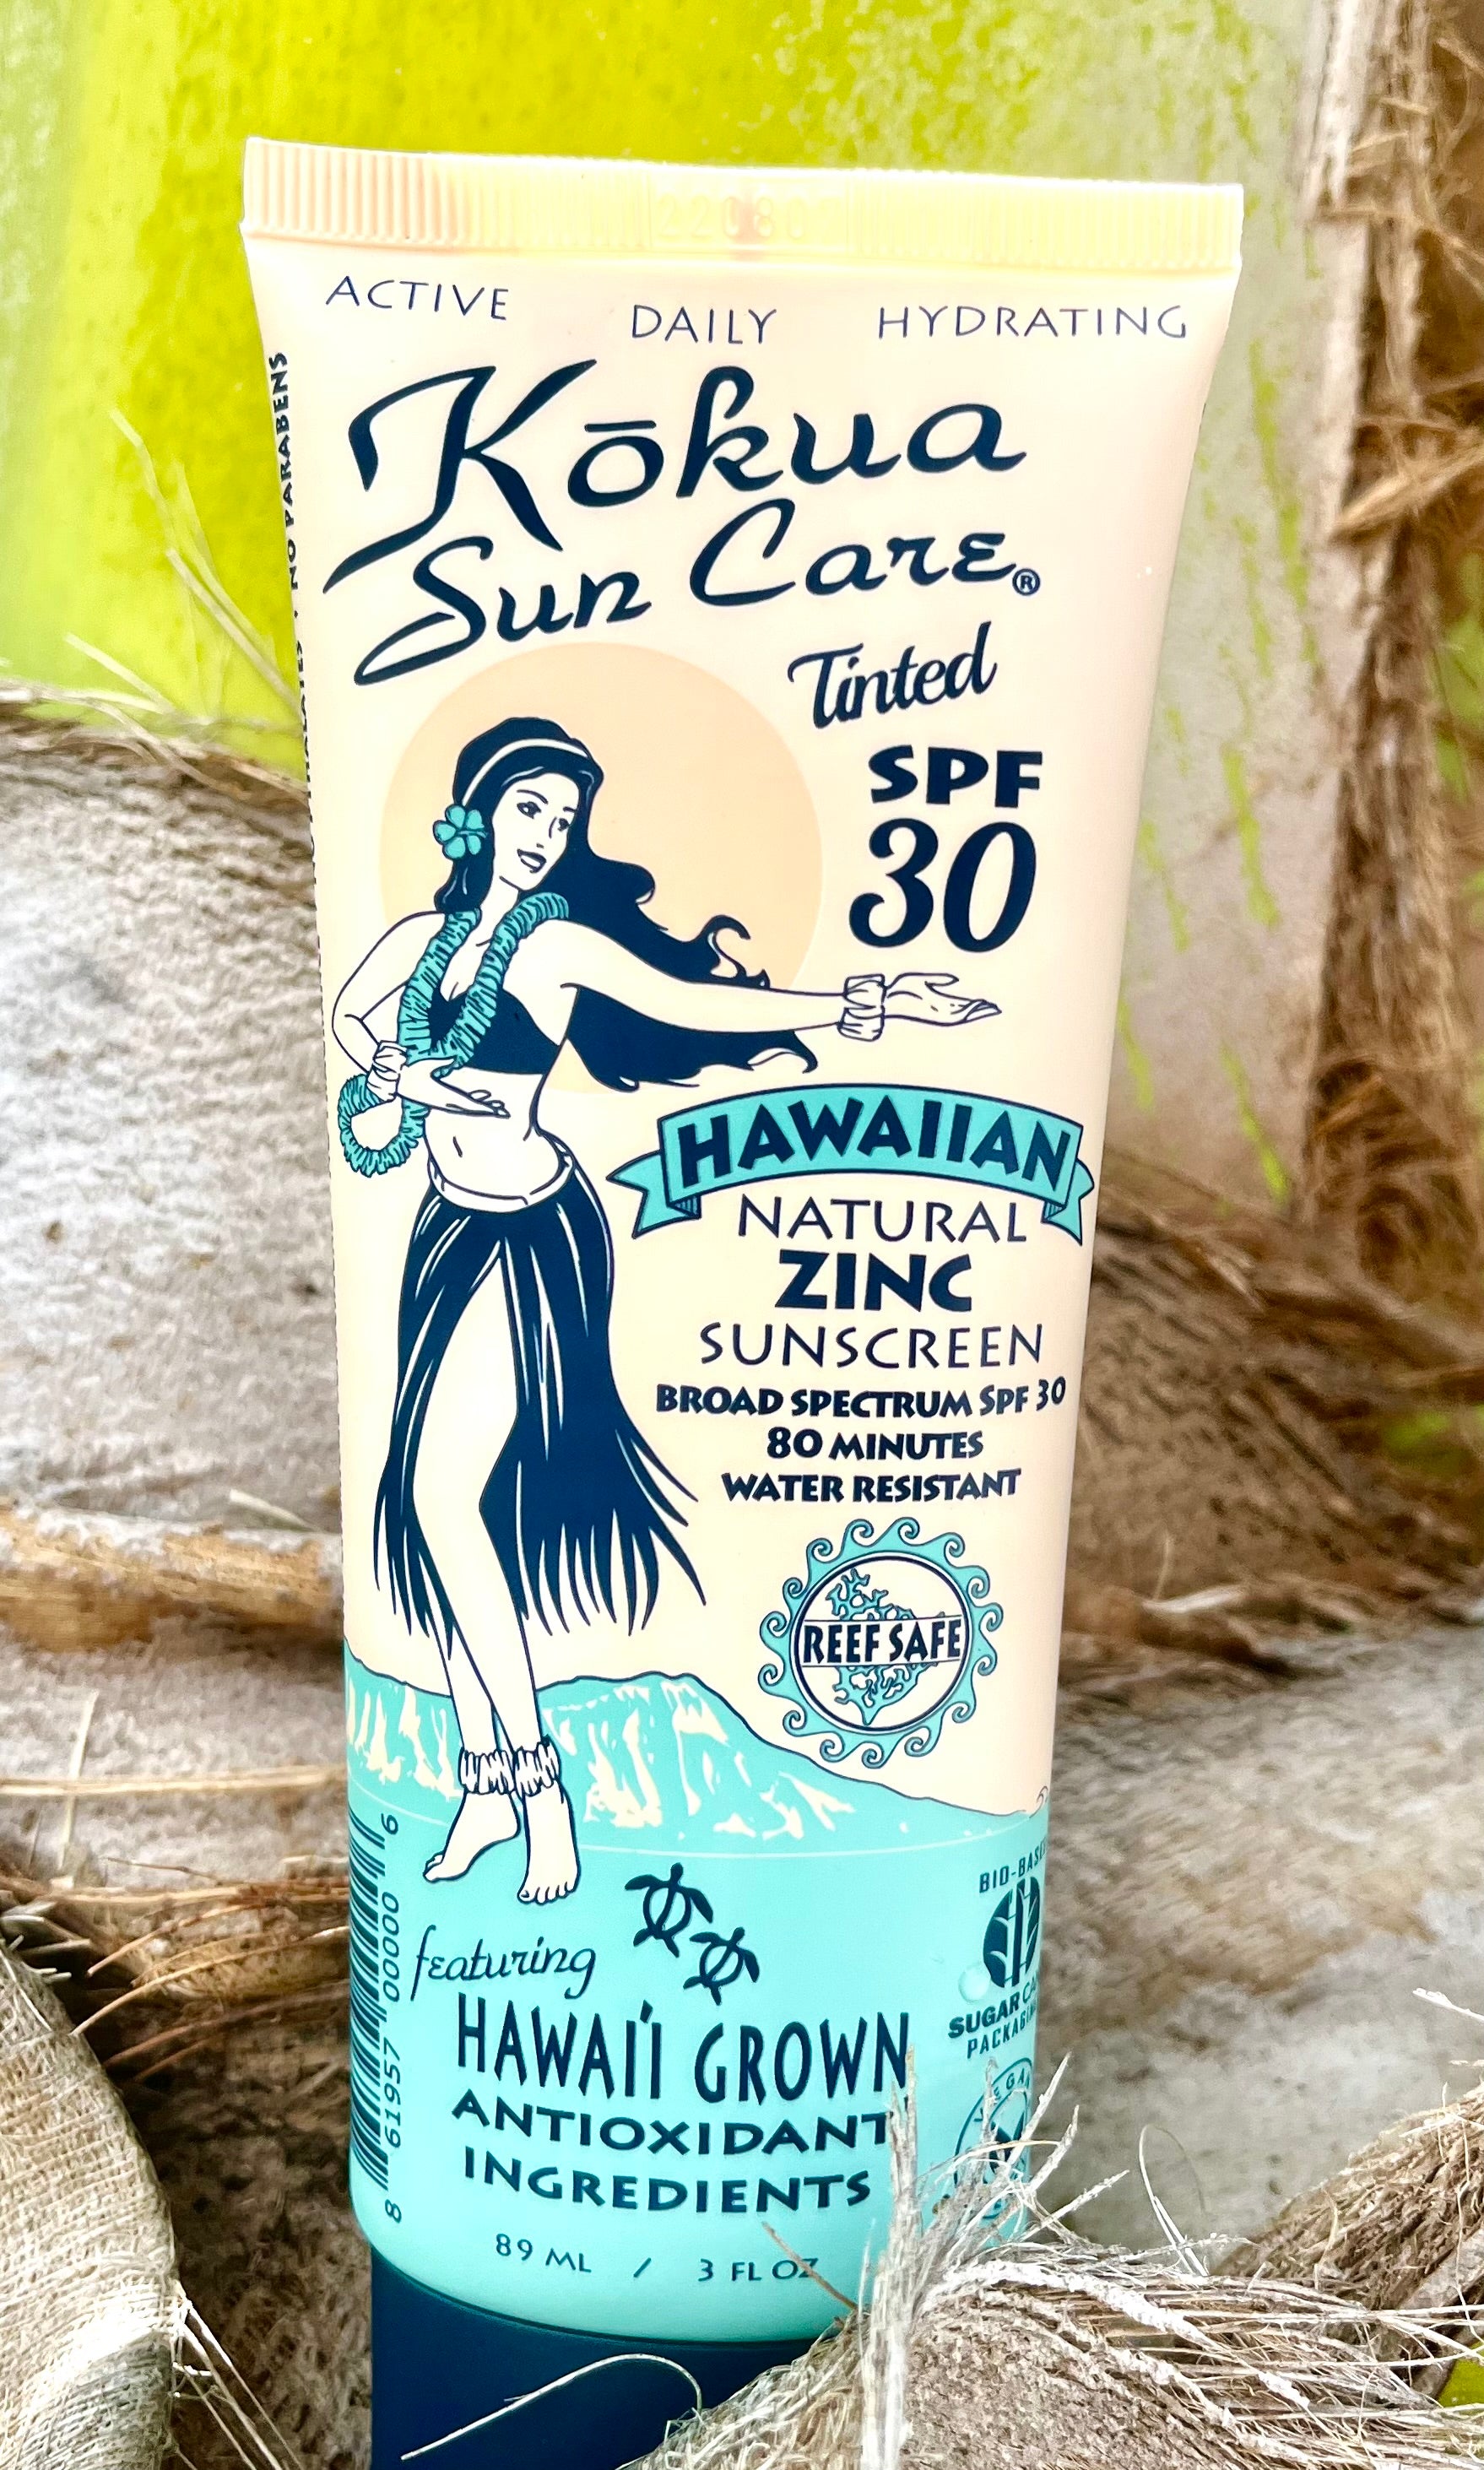 3oz SPF 30 Tinted Hawaiian Natural Zinc Sunscreen 80 Min Water Resistance Daily/Active/Moisturizing